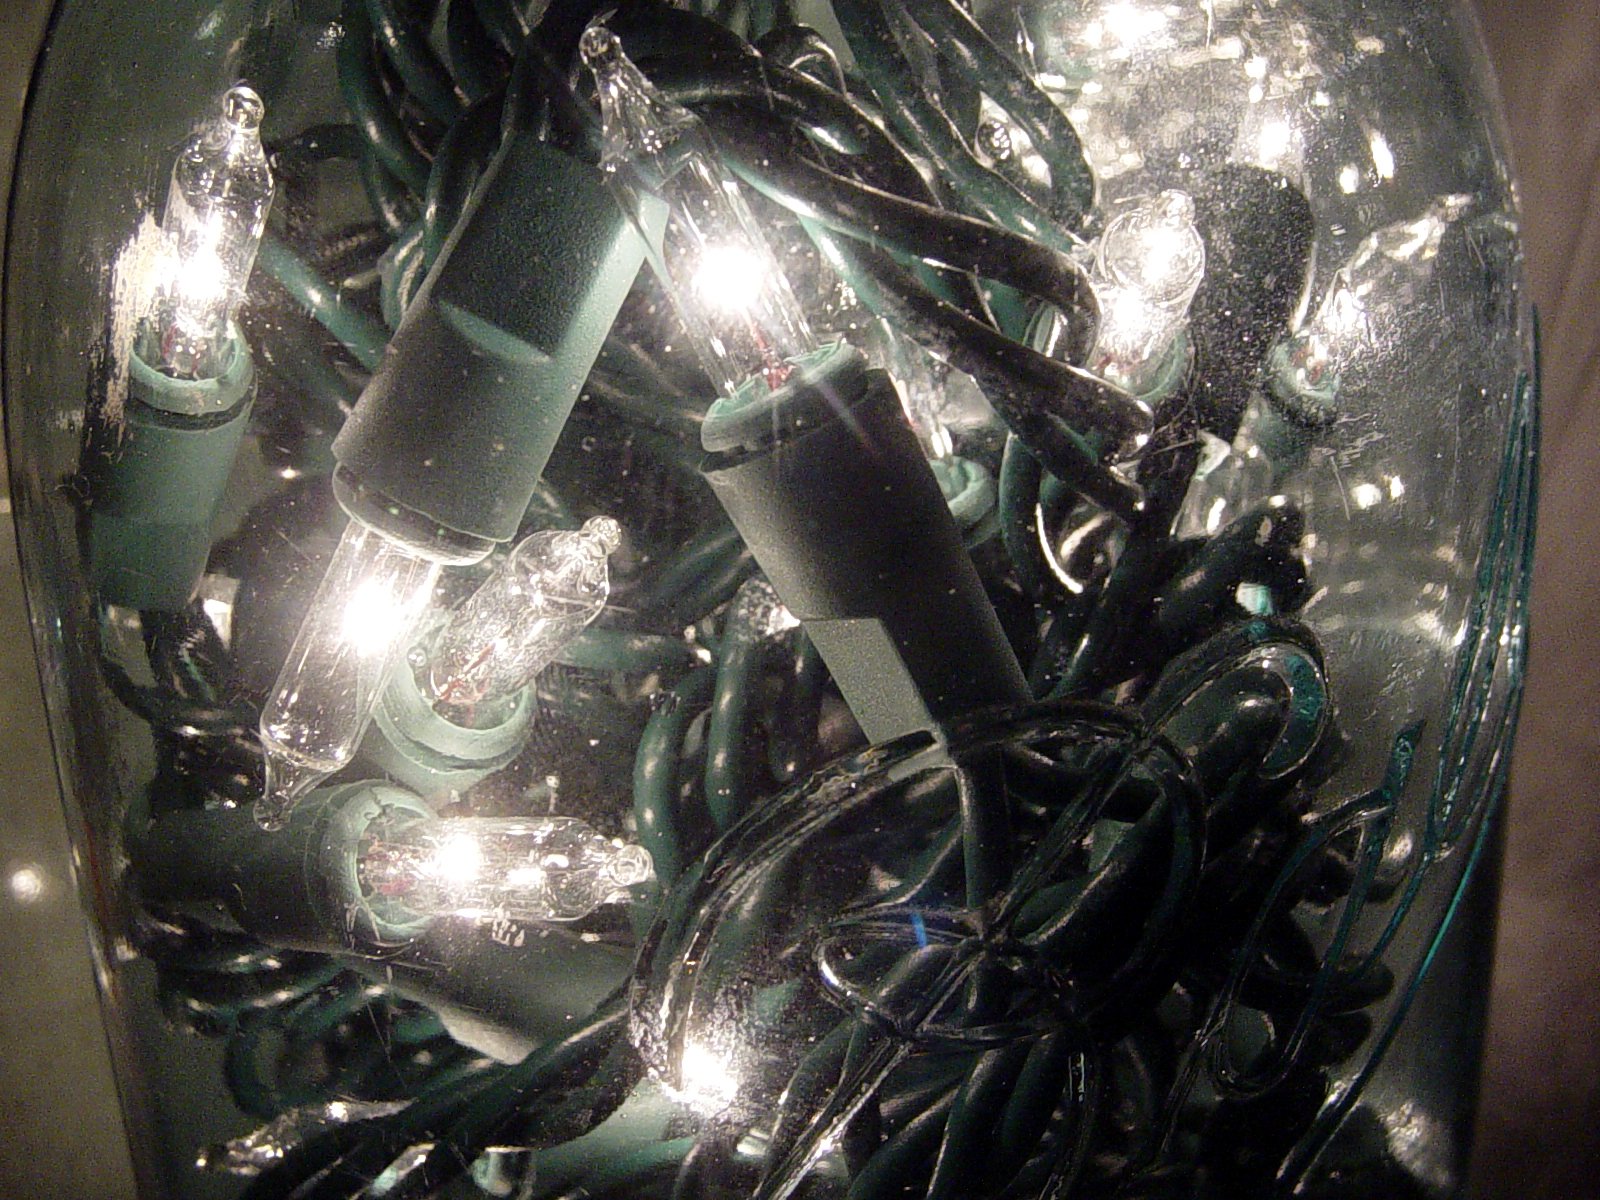 a bunch of light bulbs are placed inside a jar